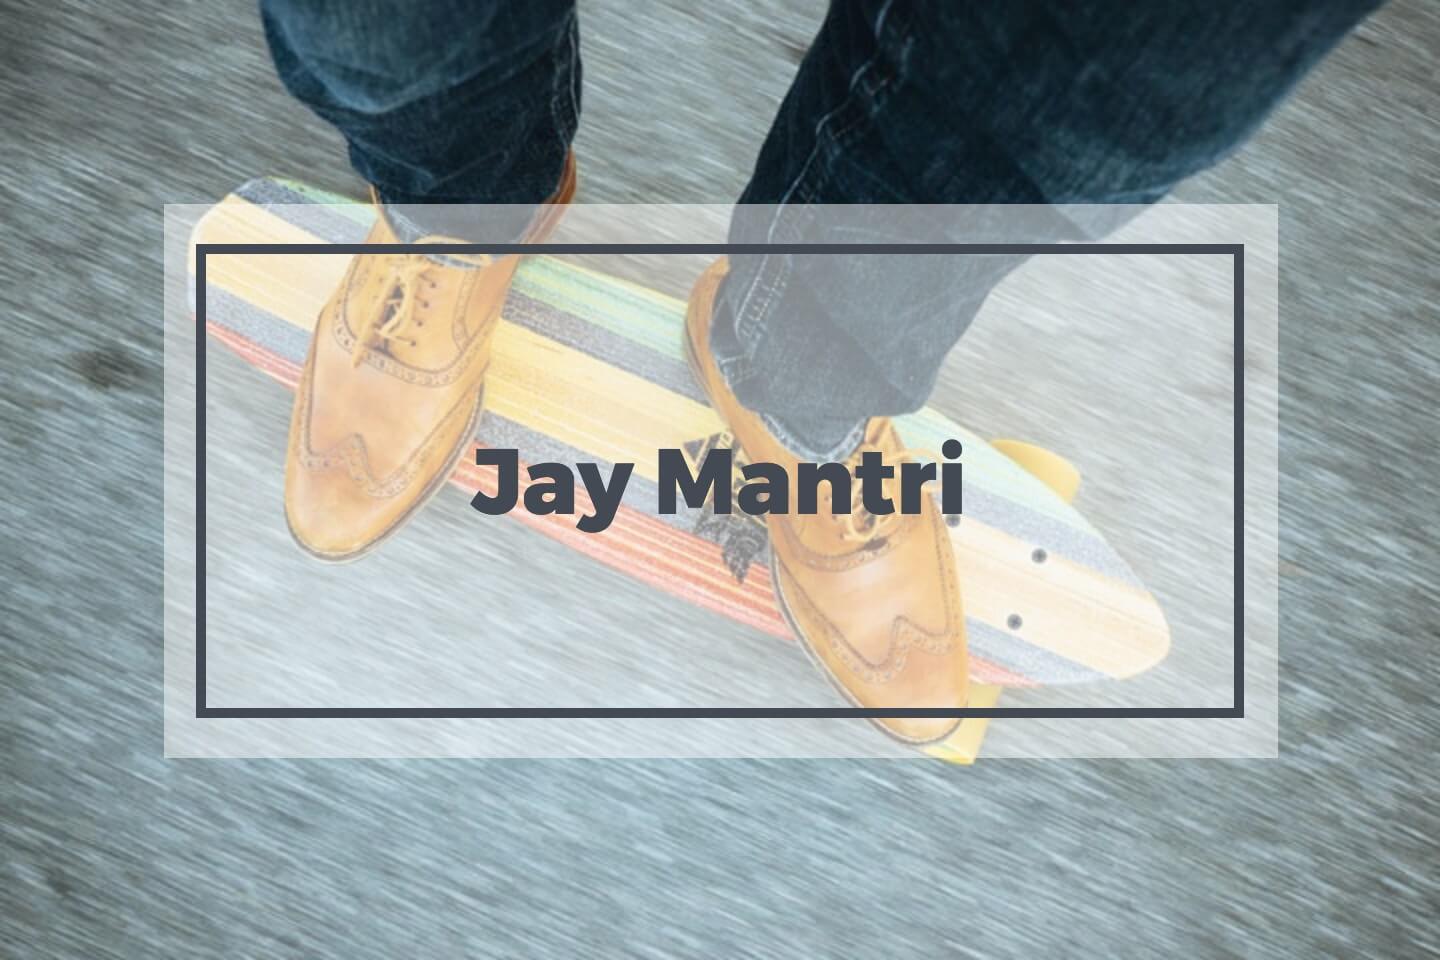 Jay Mantri free stock photos